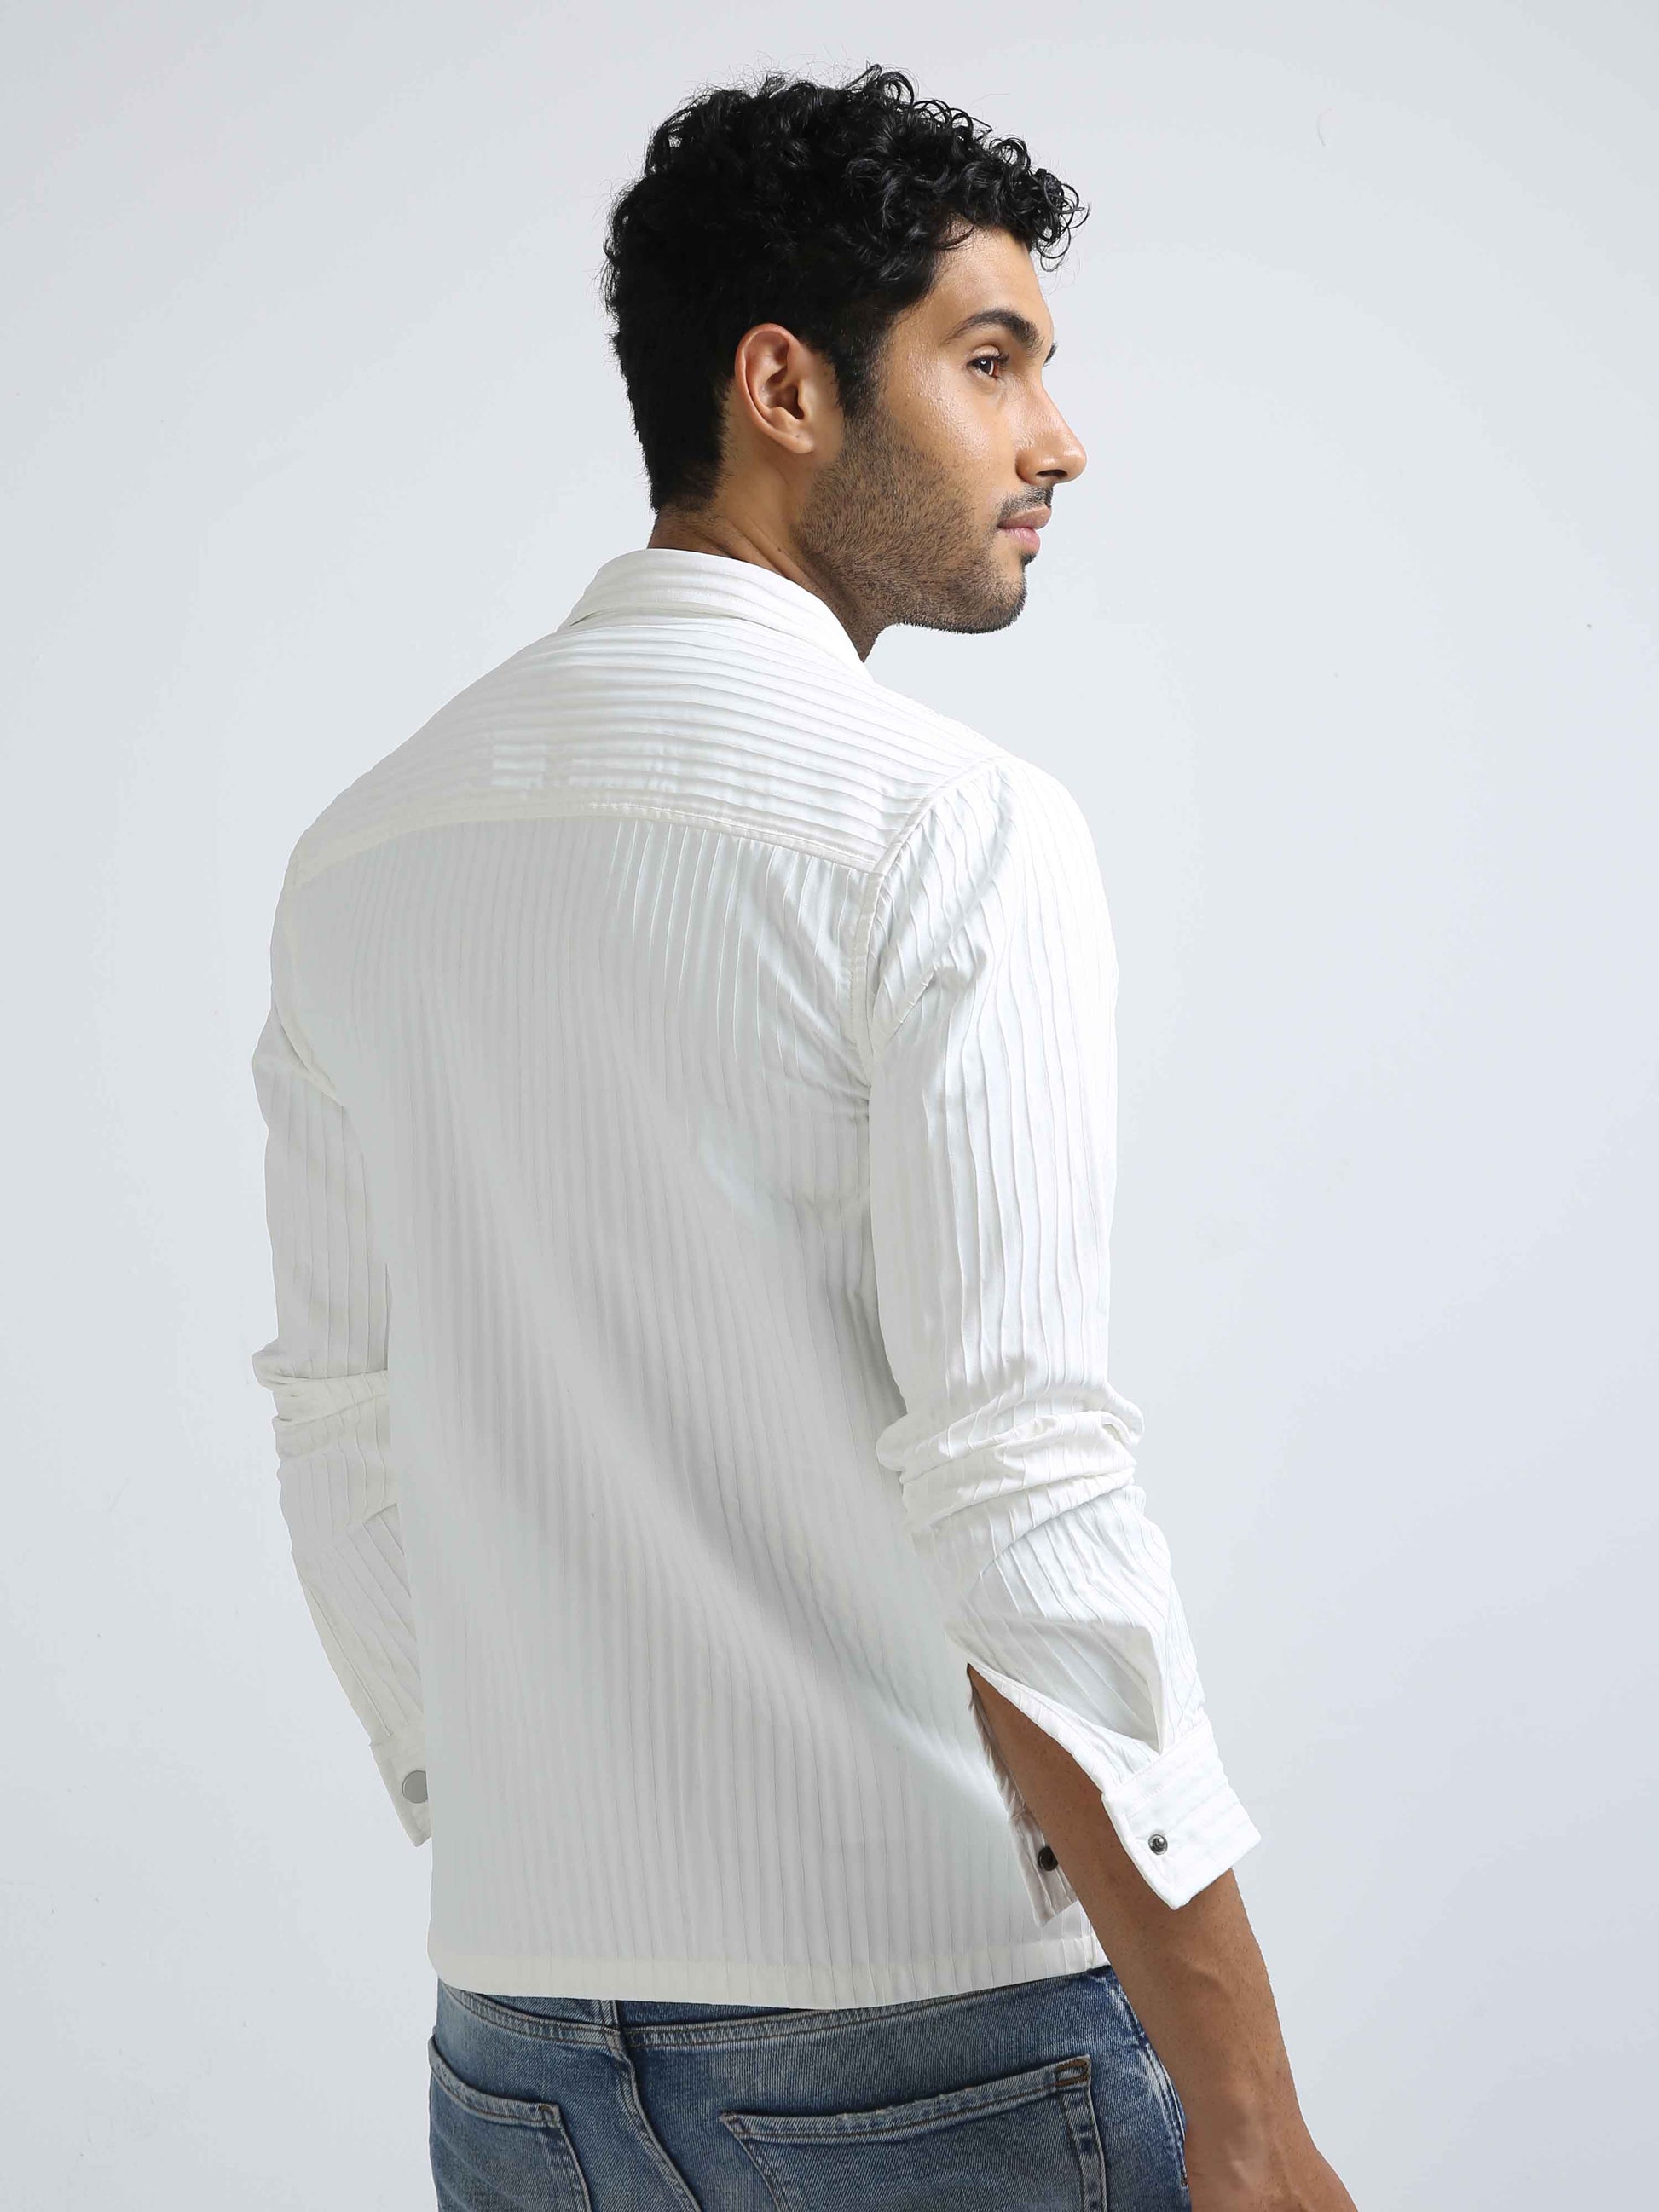 Pleated Texture White Shirt